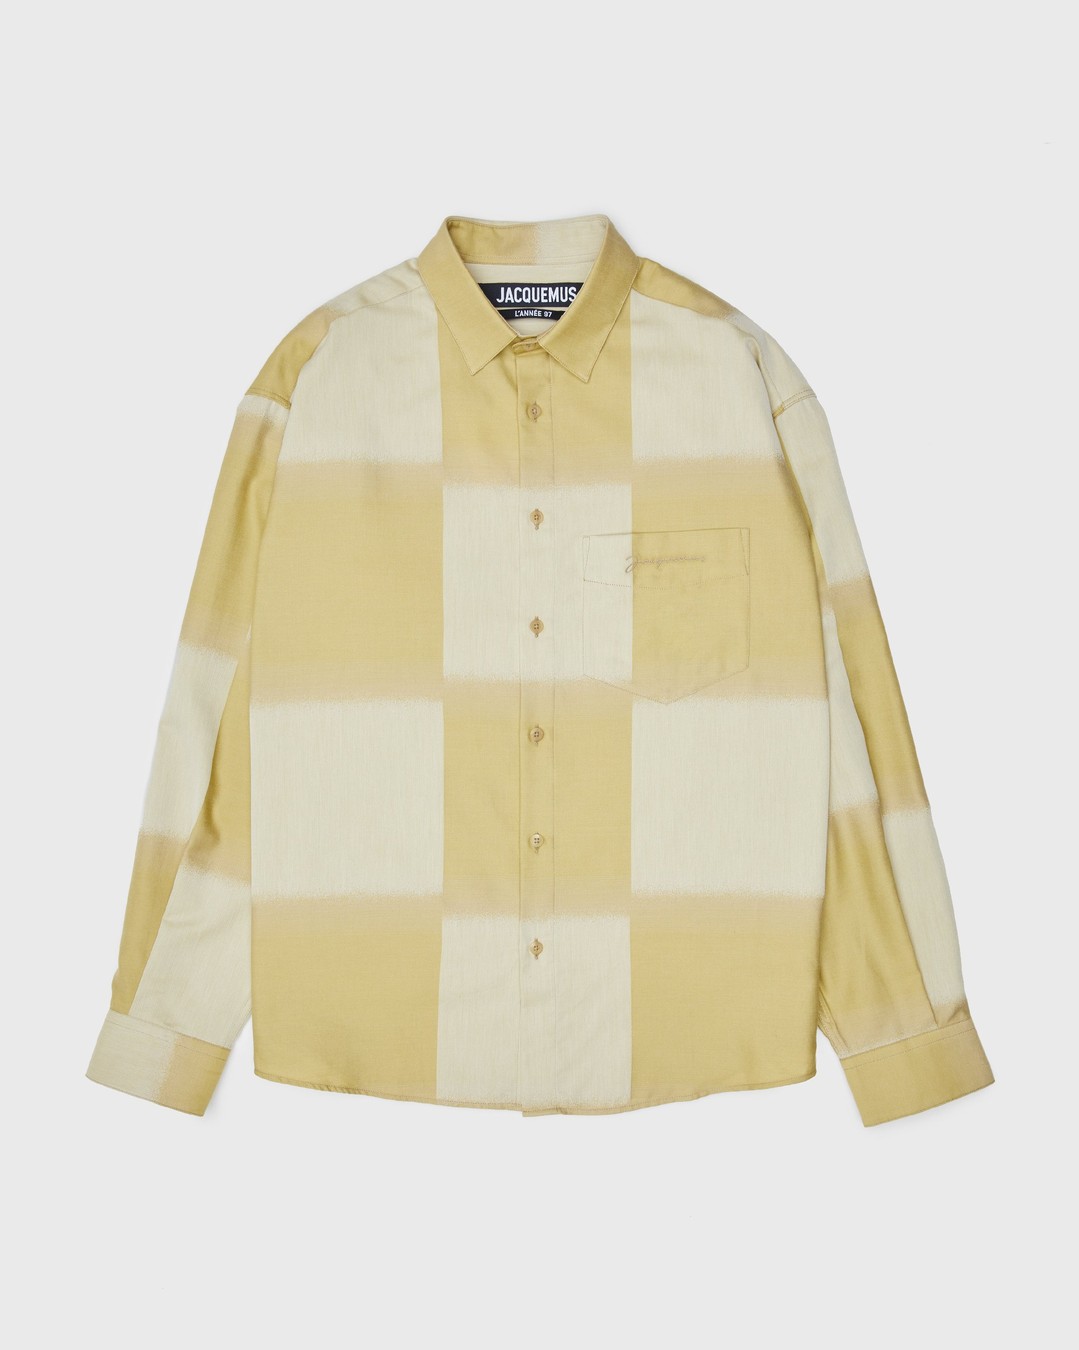 JACQUEMUS – La Chemise Simon Khaki - Shirts - Yellow - Image 1